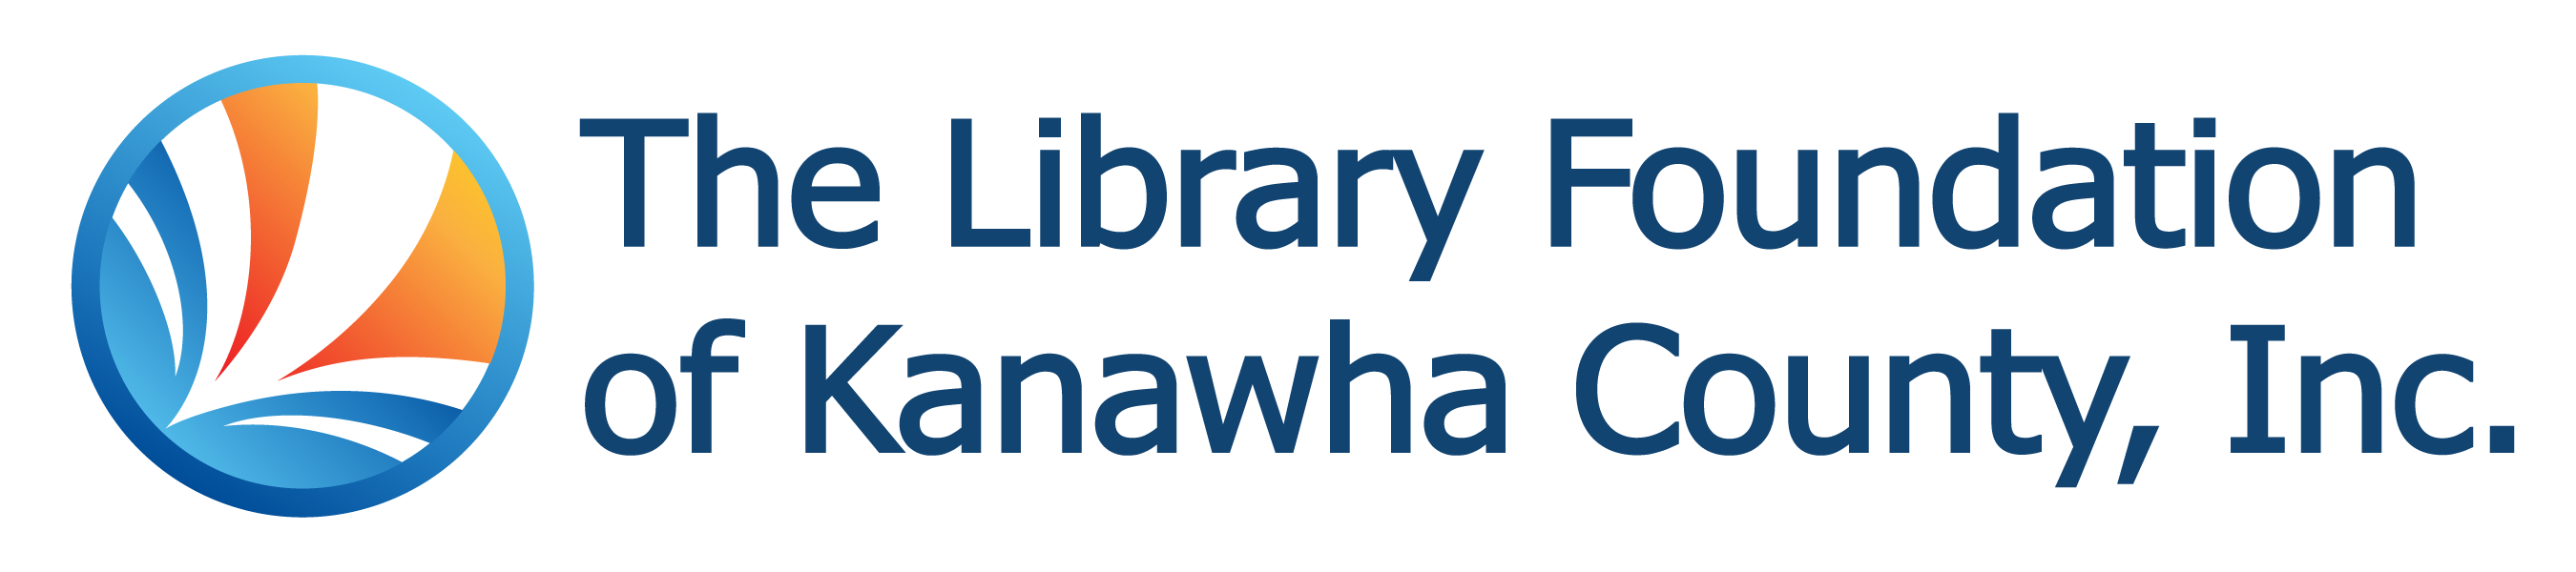 Library Foundation Logo